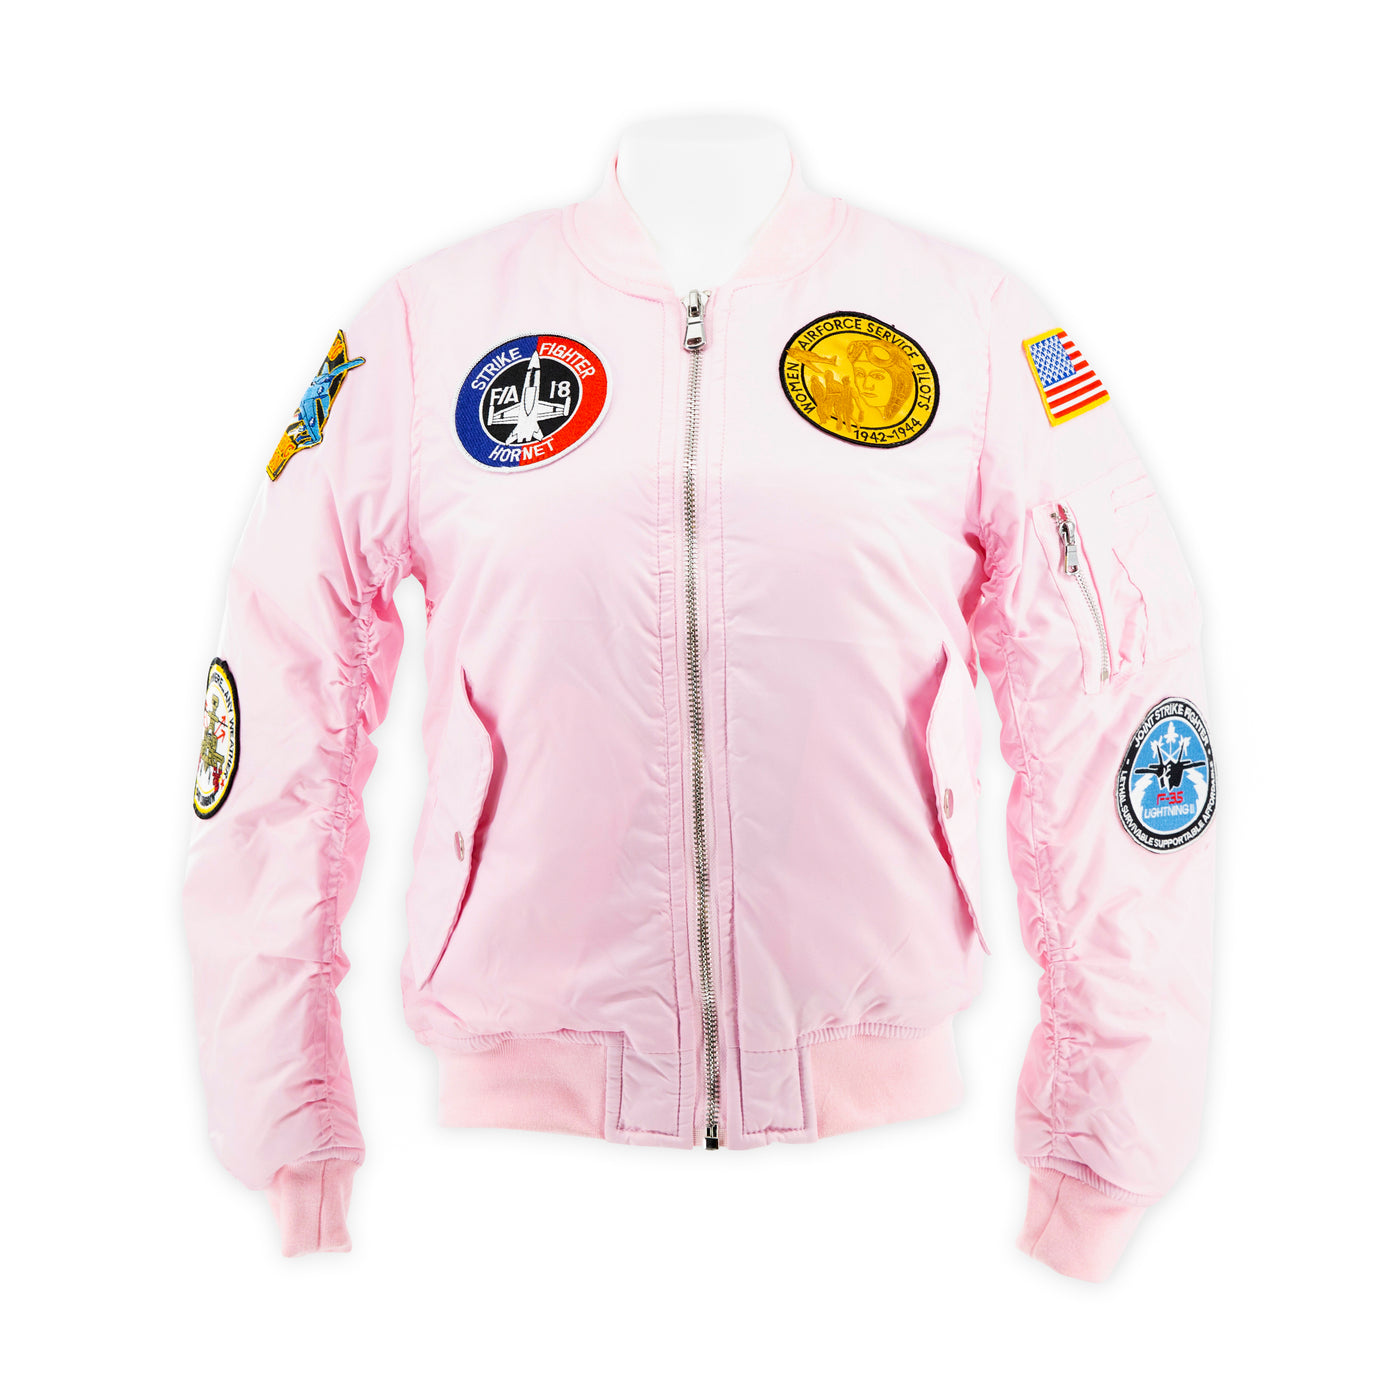 Adult Pink Flight Jacket